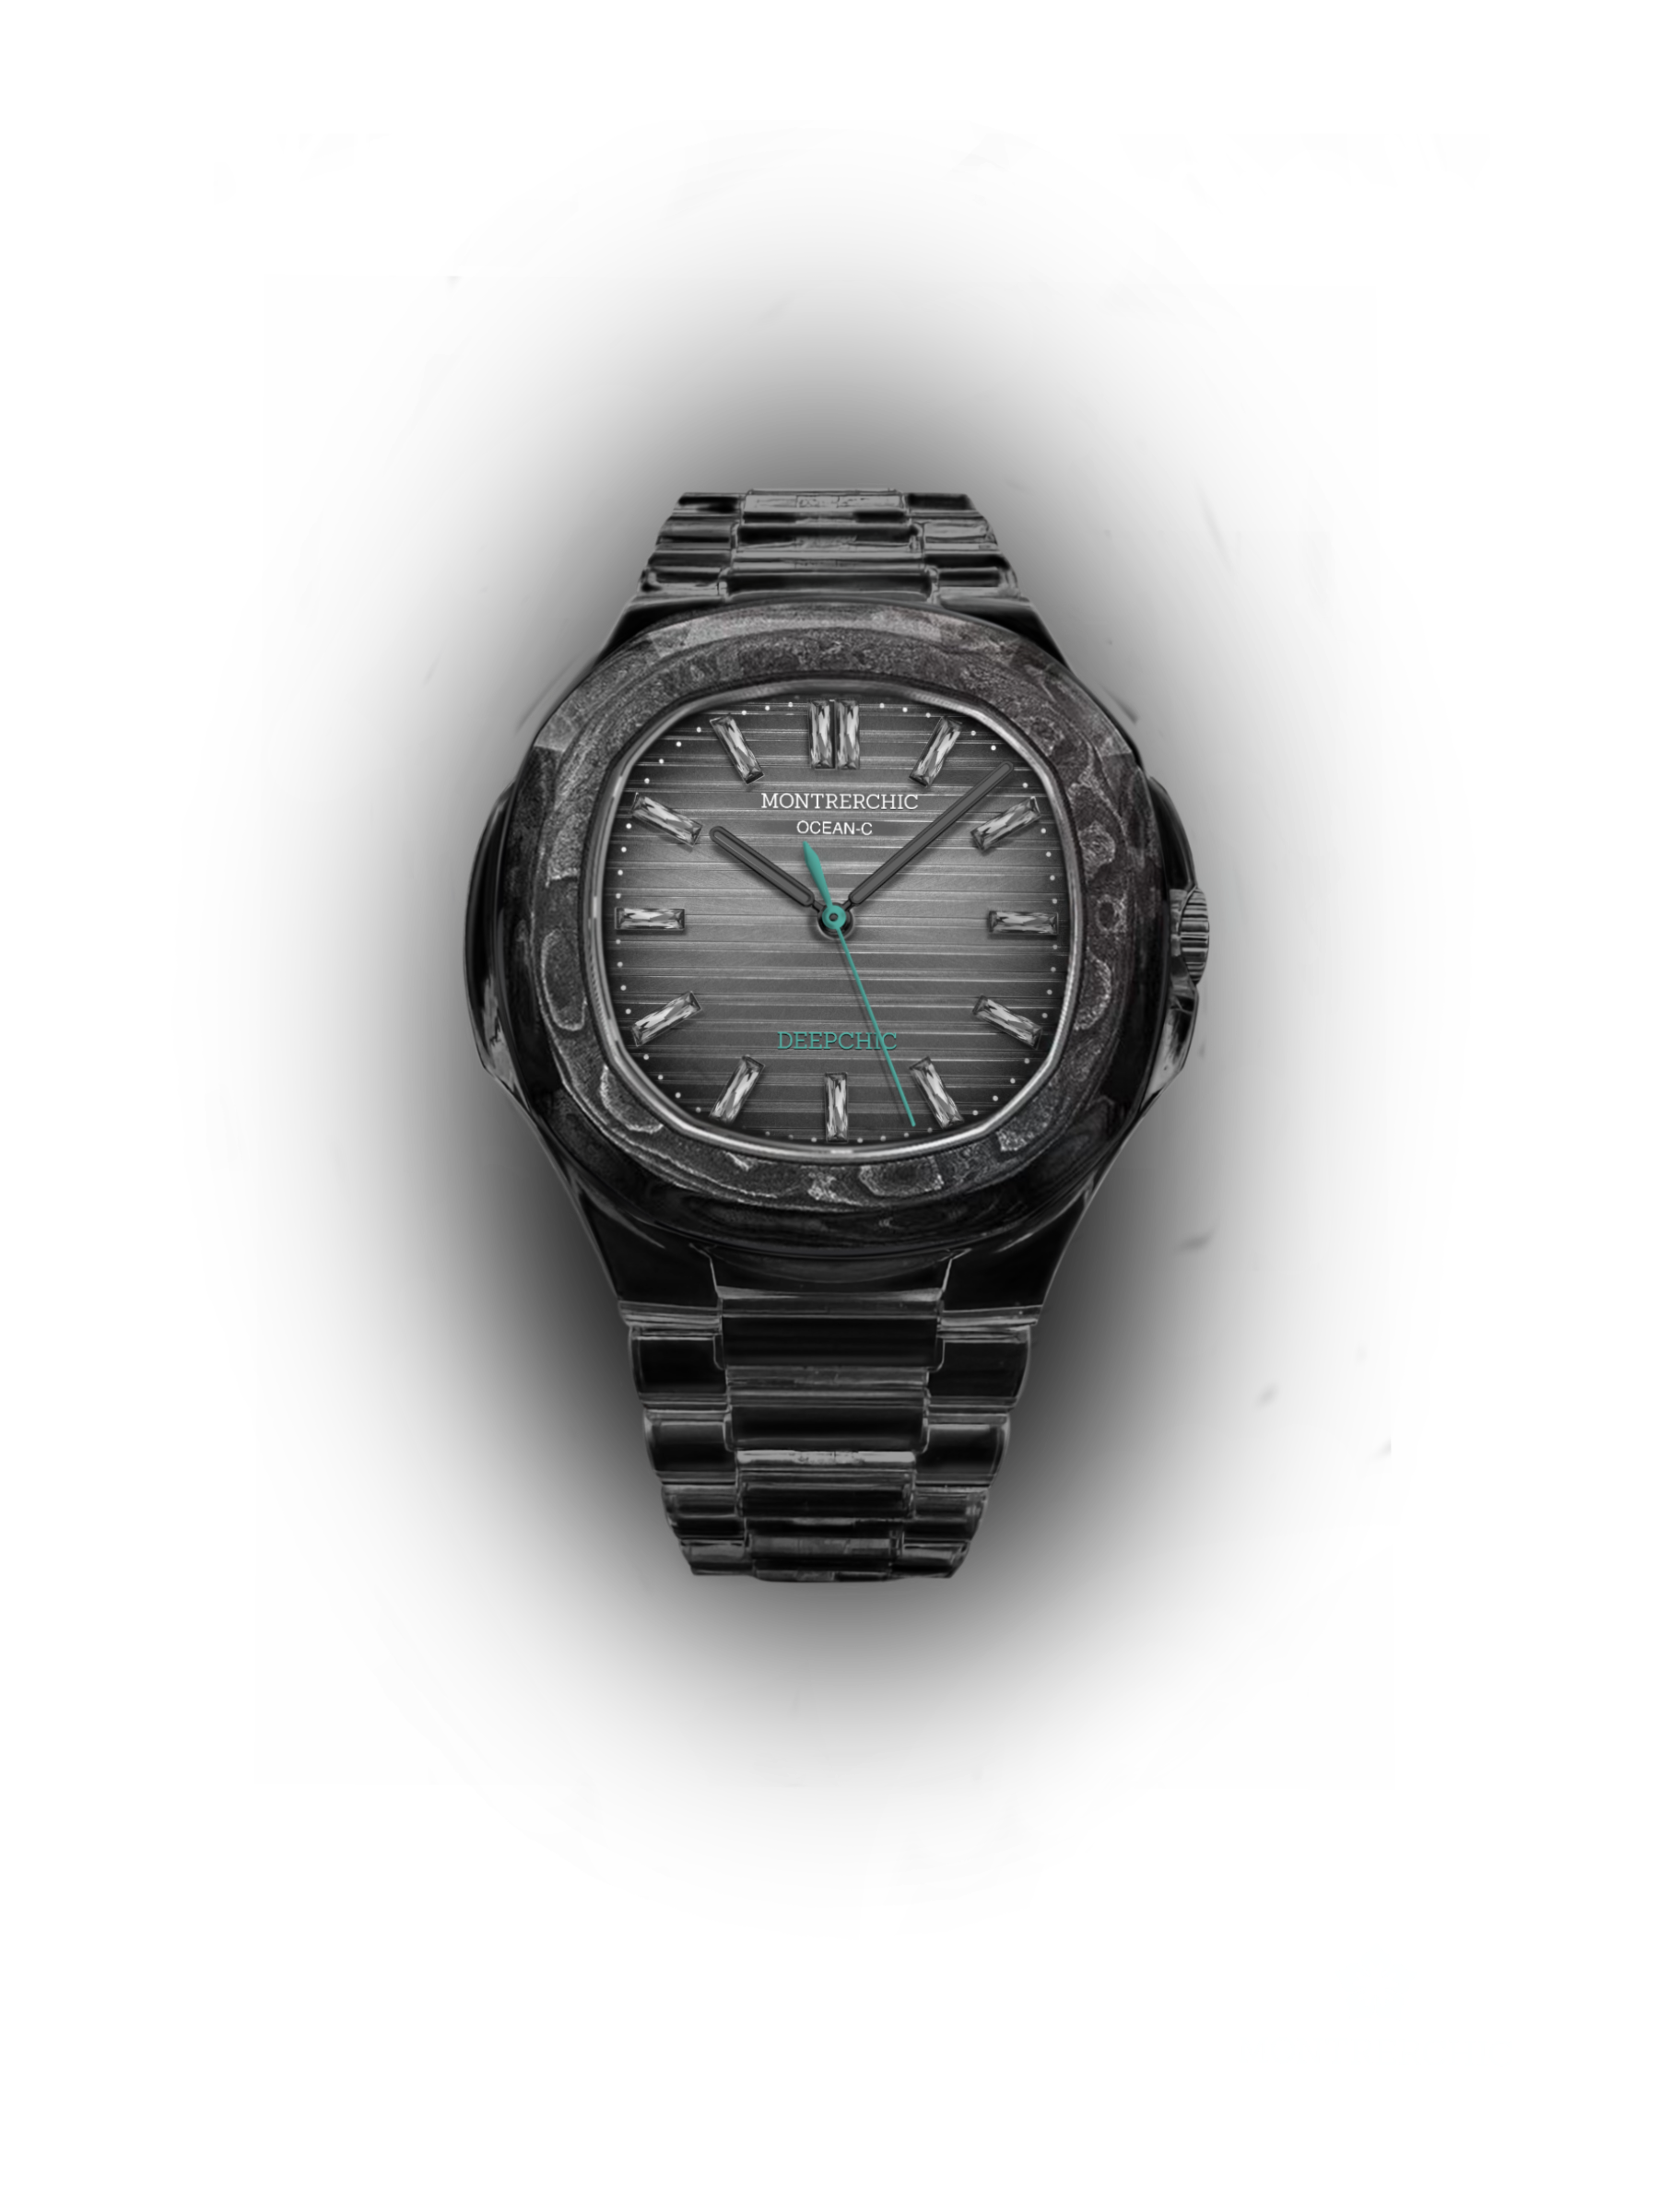 Montrerchic luxury watch